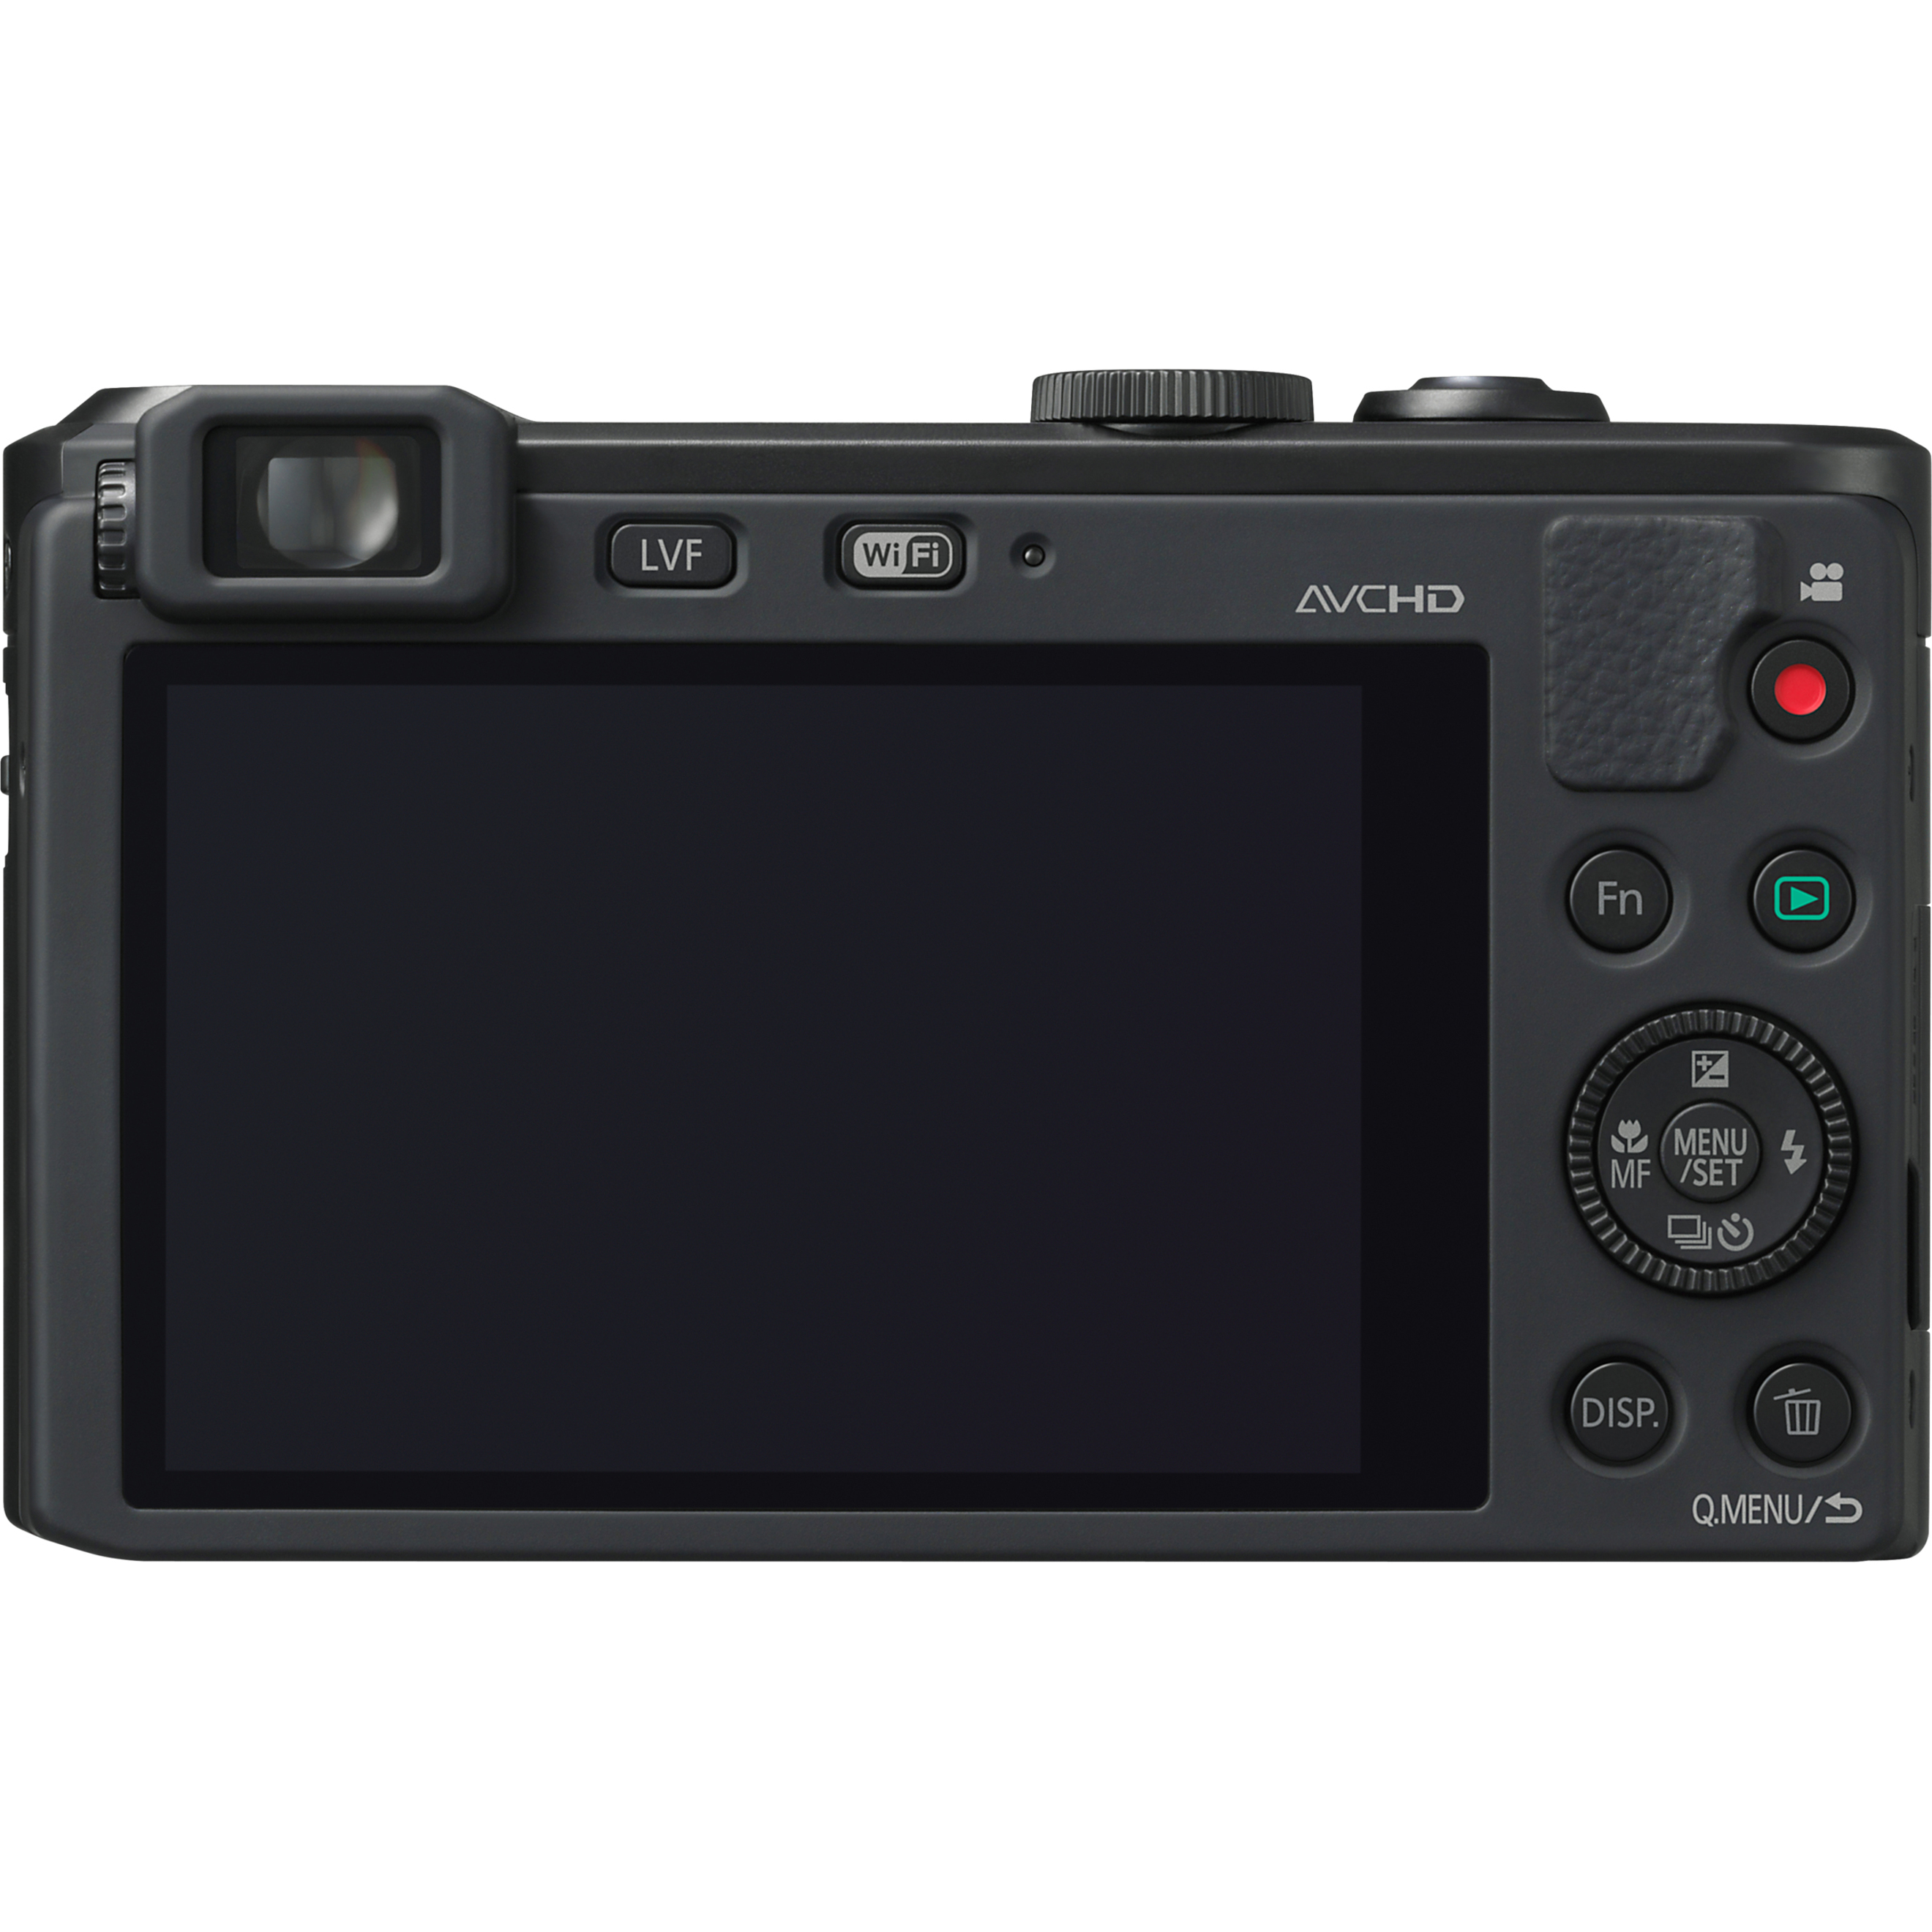 Panasonic Lumix DMC-LF1 12.1 Megapixel Bridge Camera, Black - image 2 of 5